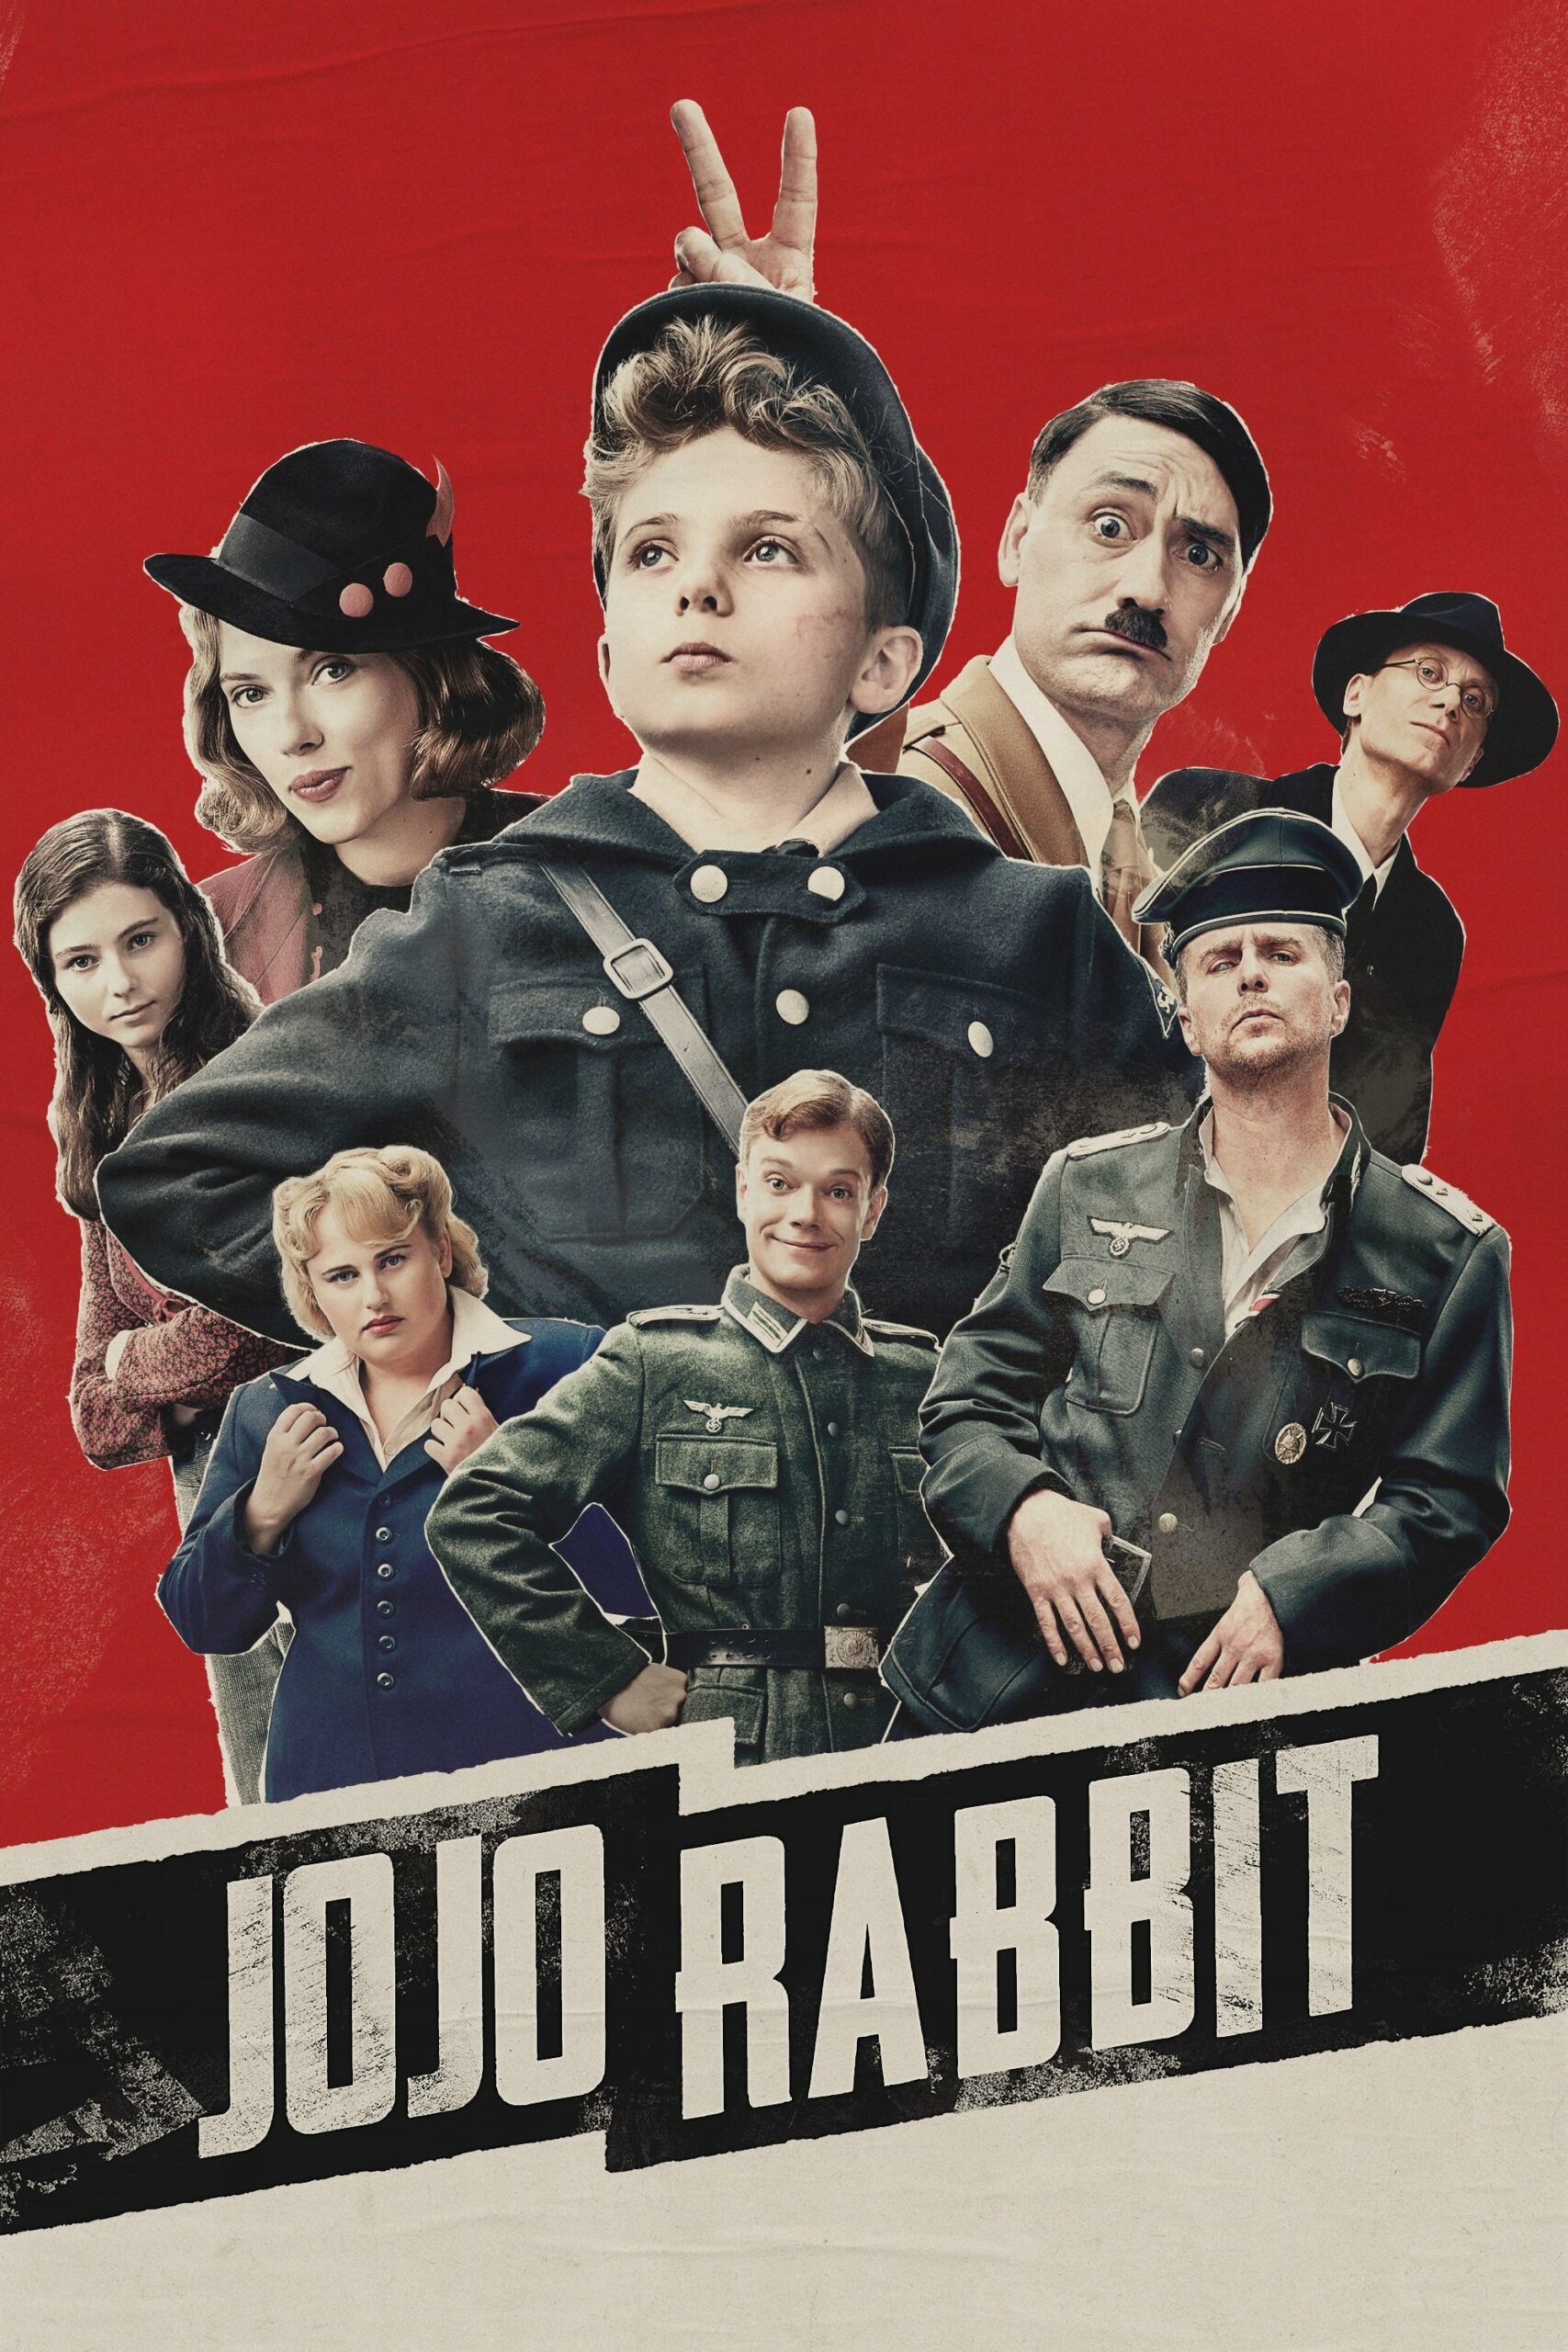 JoJo Rabbit movie review